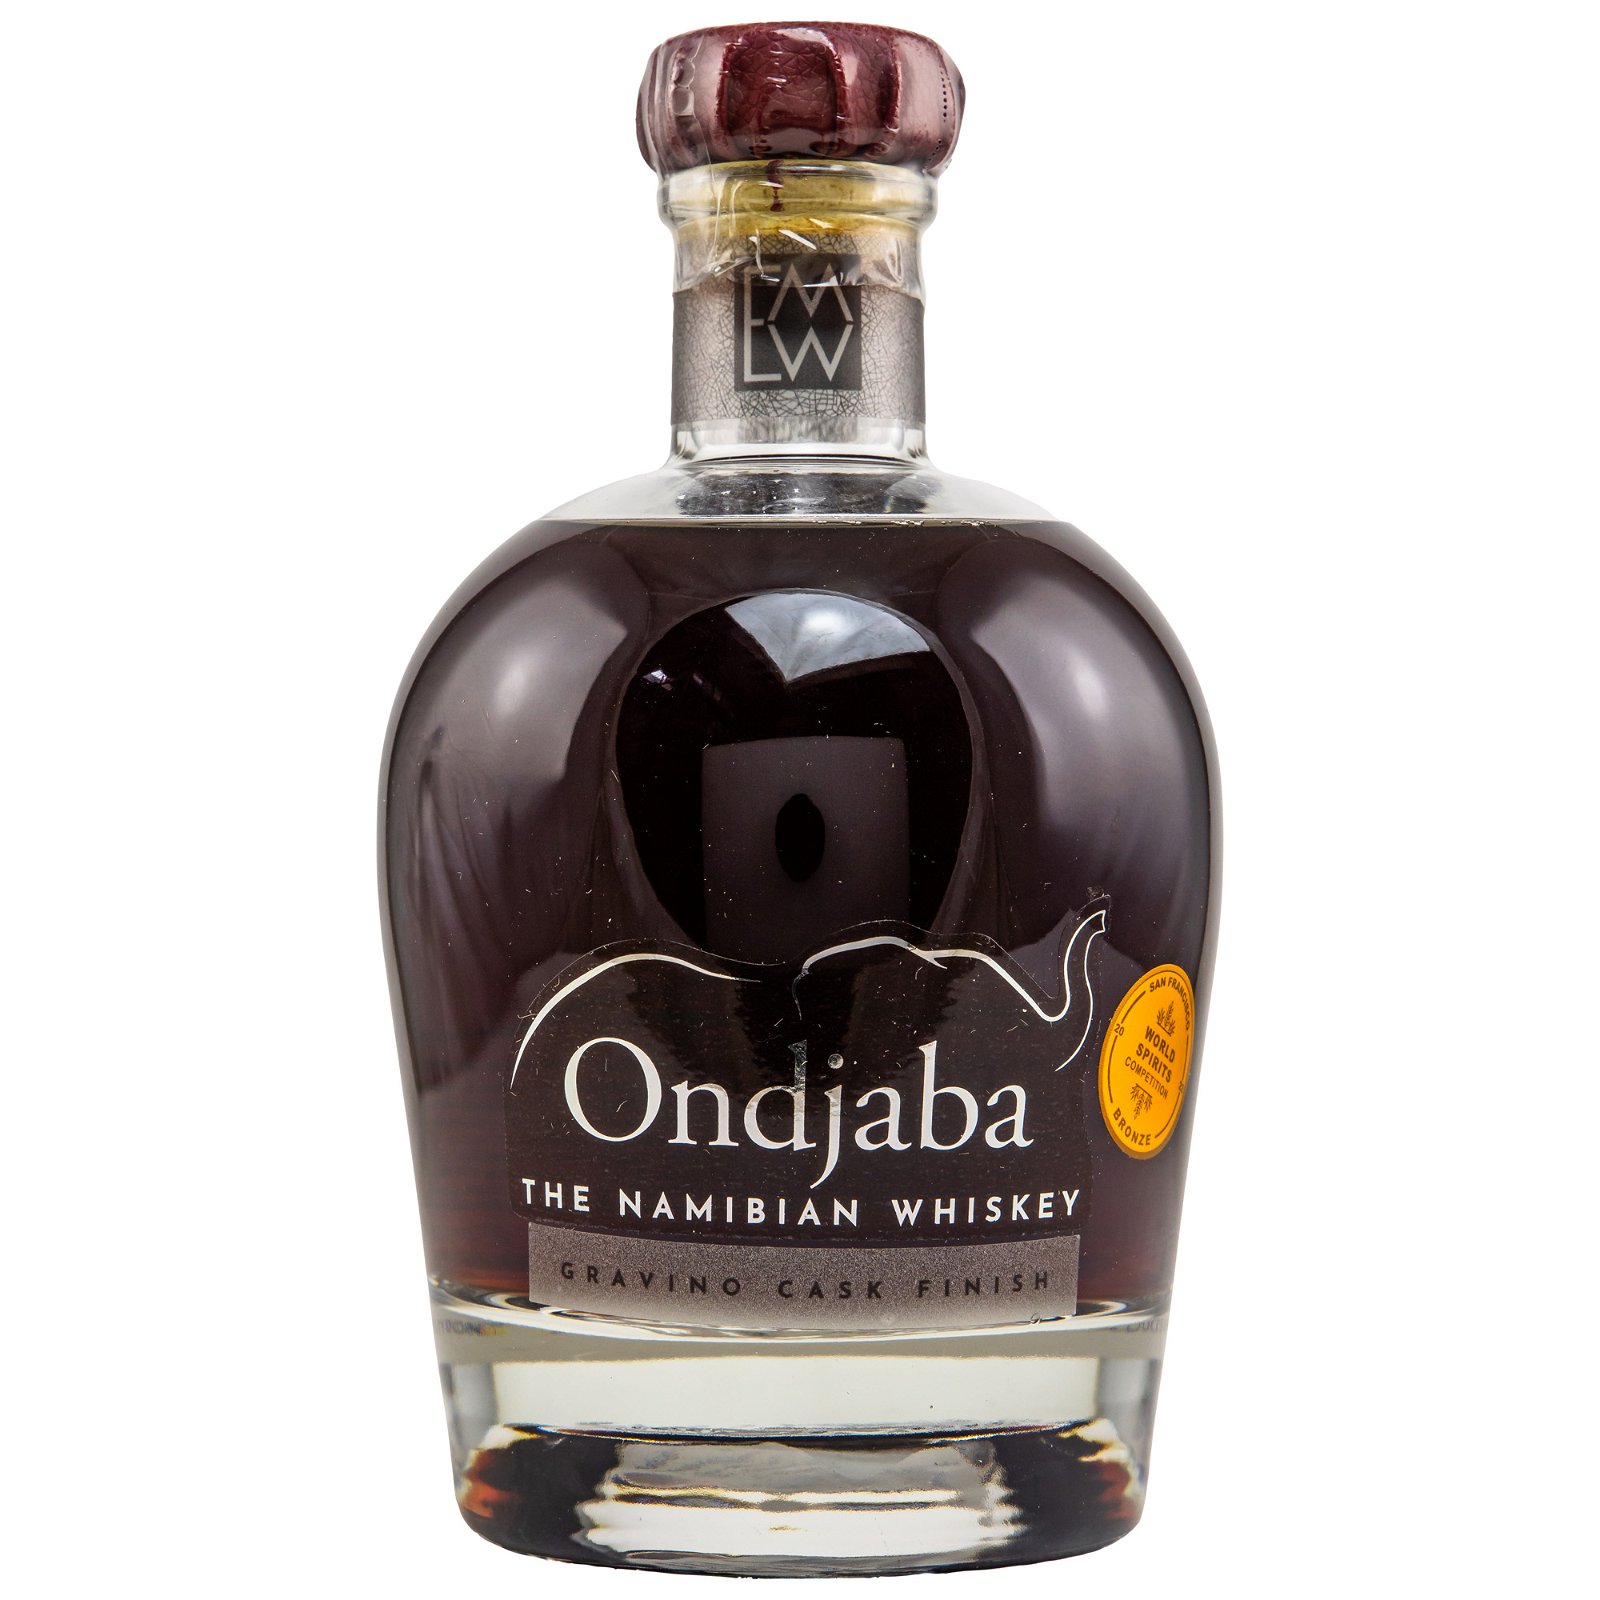 Ondjaba The Namibian Whiskey Gravino Cask Finish